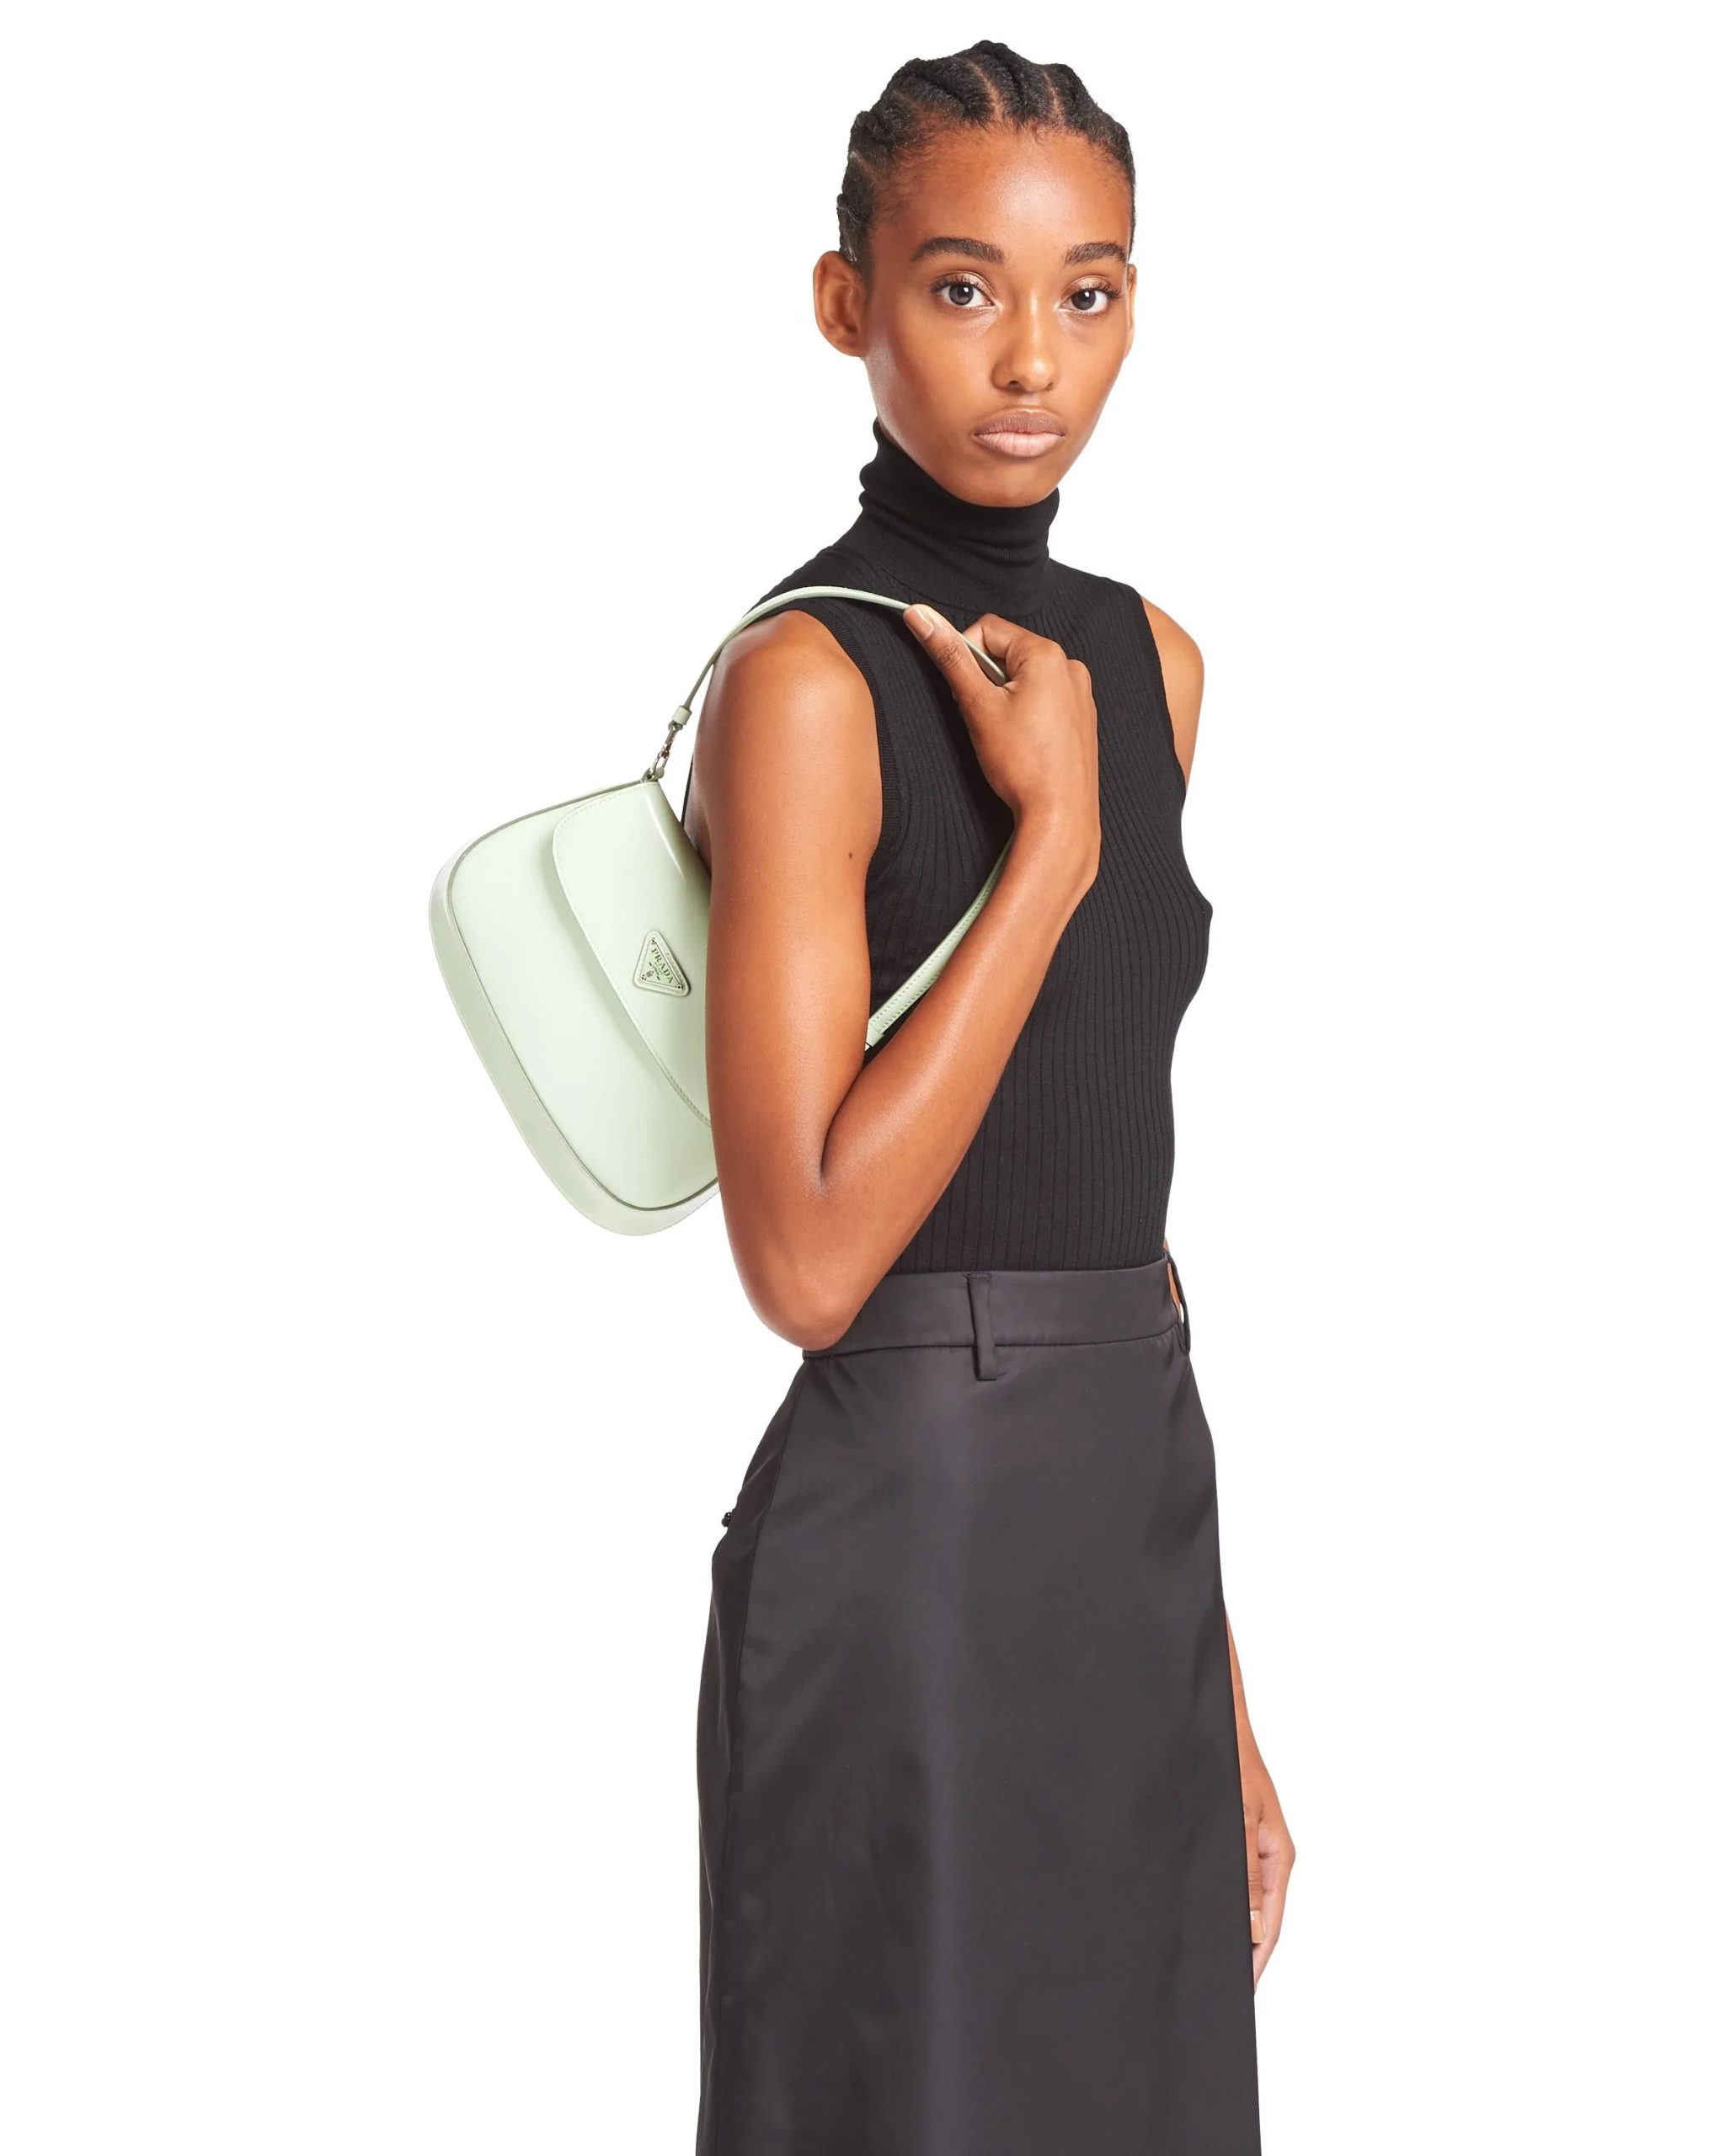 Prada Cleo Brushed Leather Shoulder Bag With Flap, Aqua